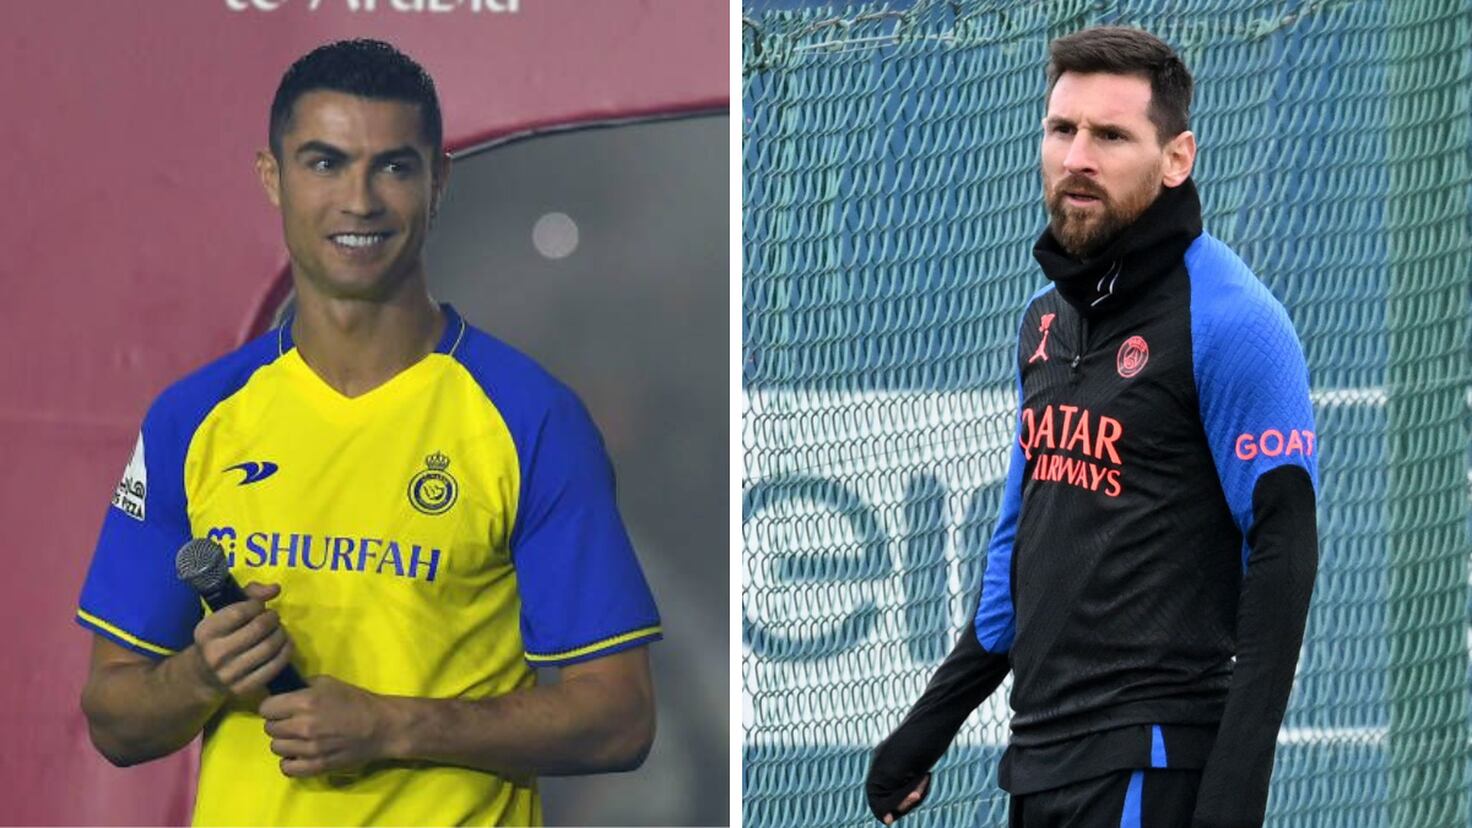 The picture of Cristiano Ronaldo and - Leo Legend Messi